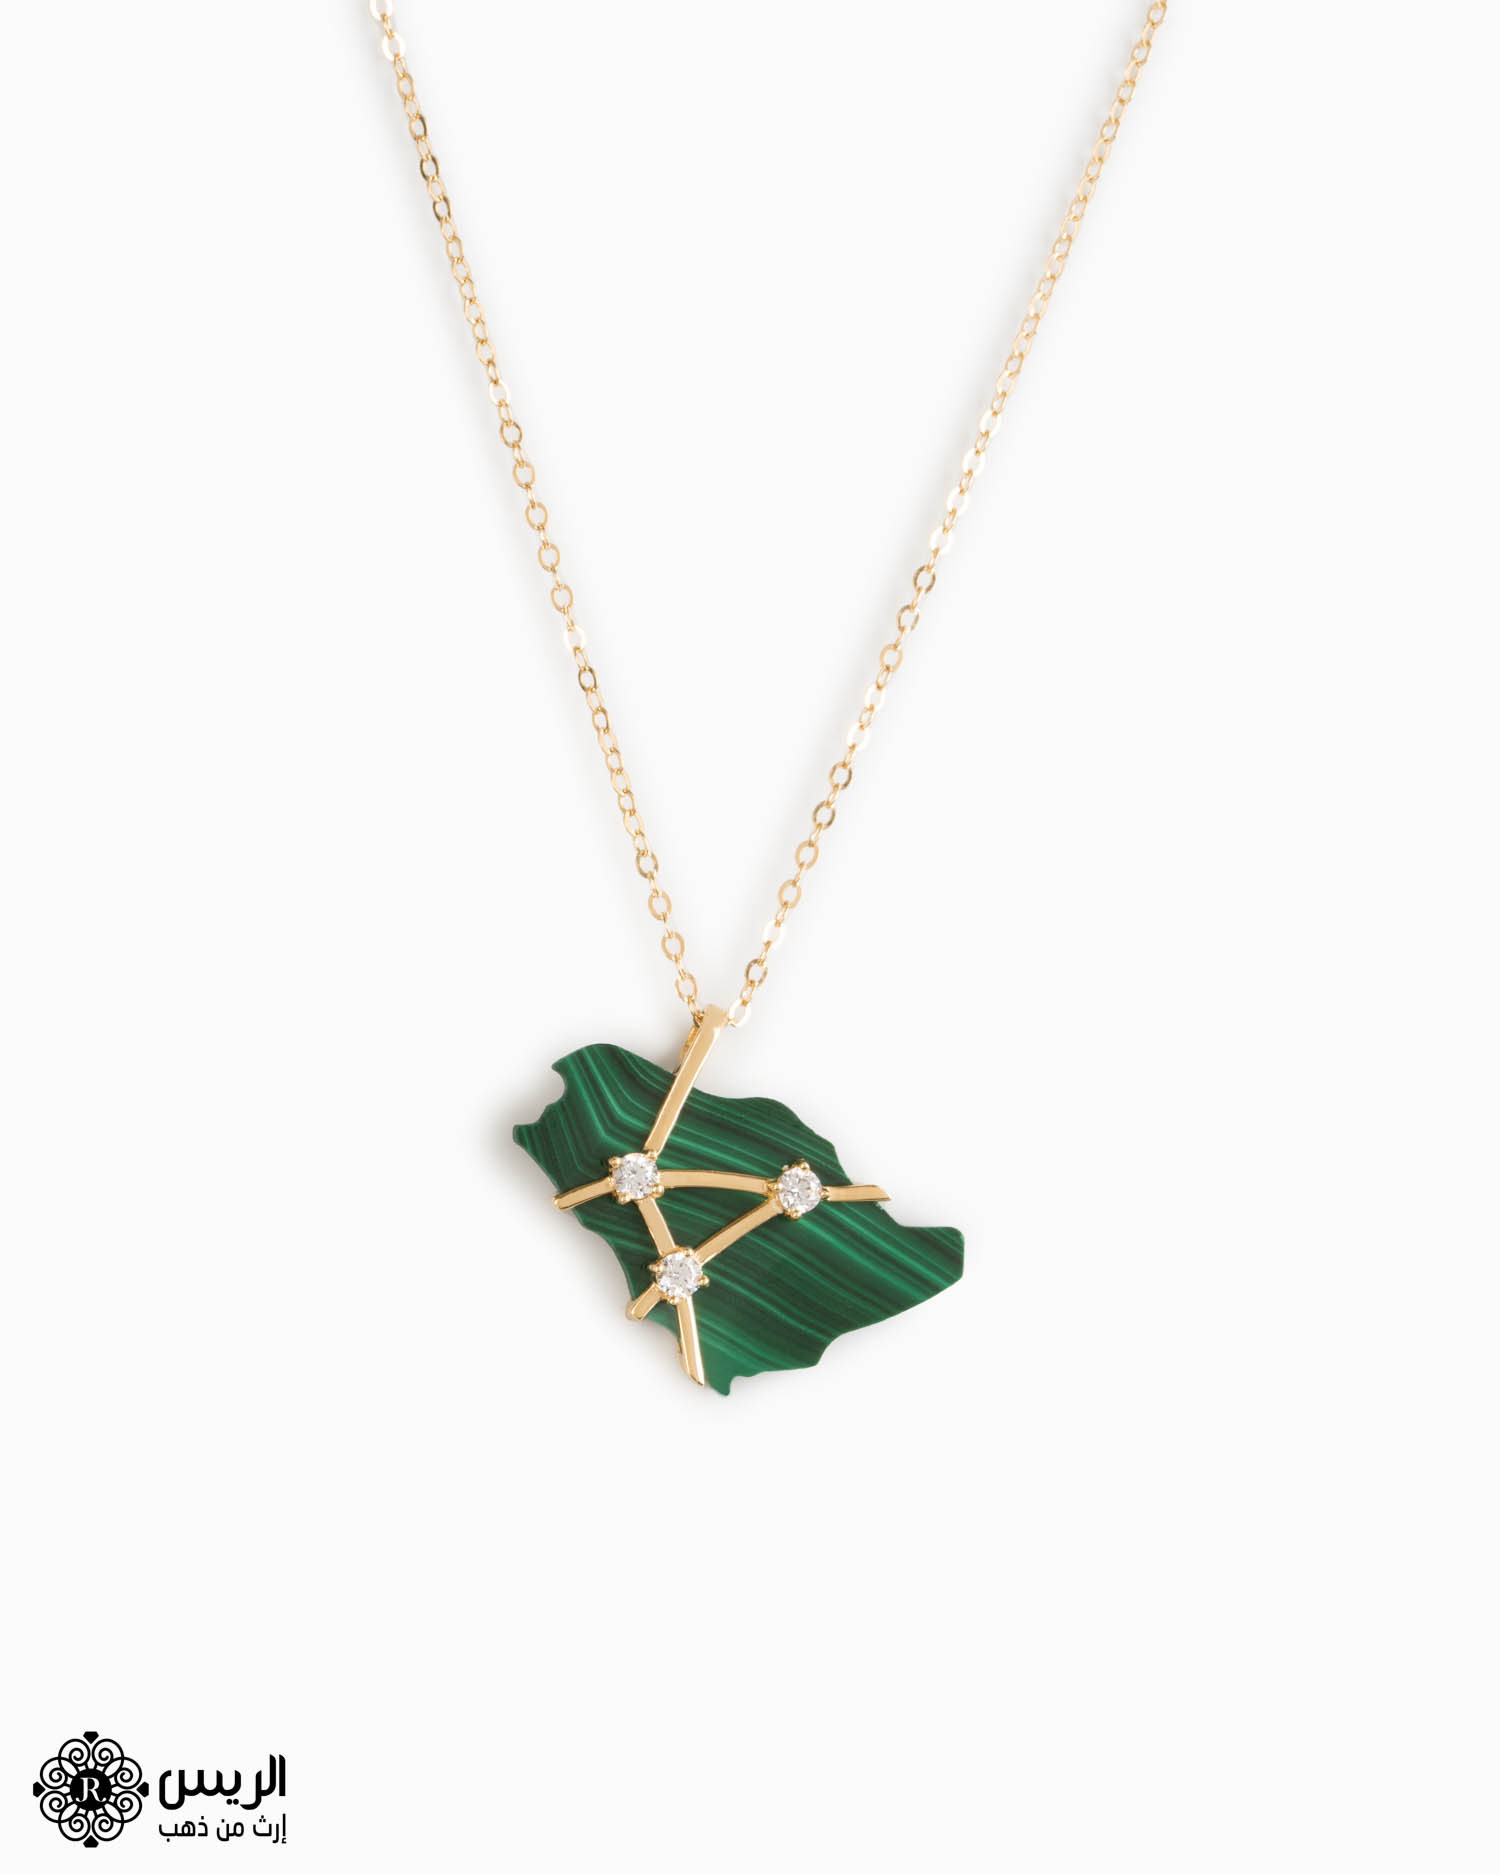 Raies jewelry Necklace With Chain KSA Map Malachite Stone تعليقة مع سلسله خريطة المملكة بحجر ملاكيت الريس للمجوهرات